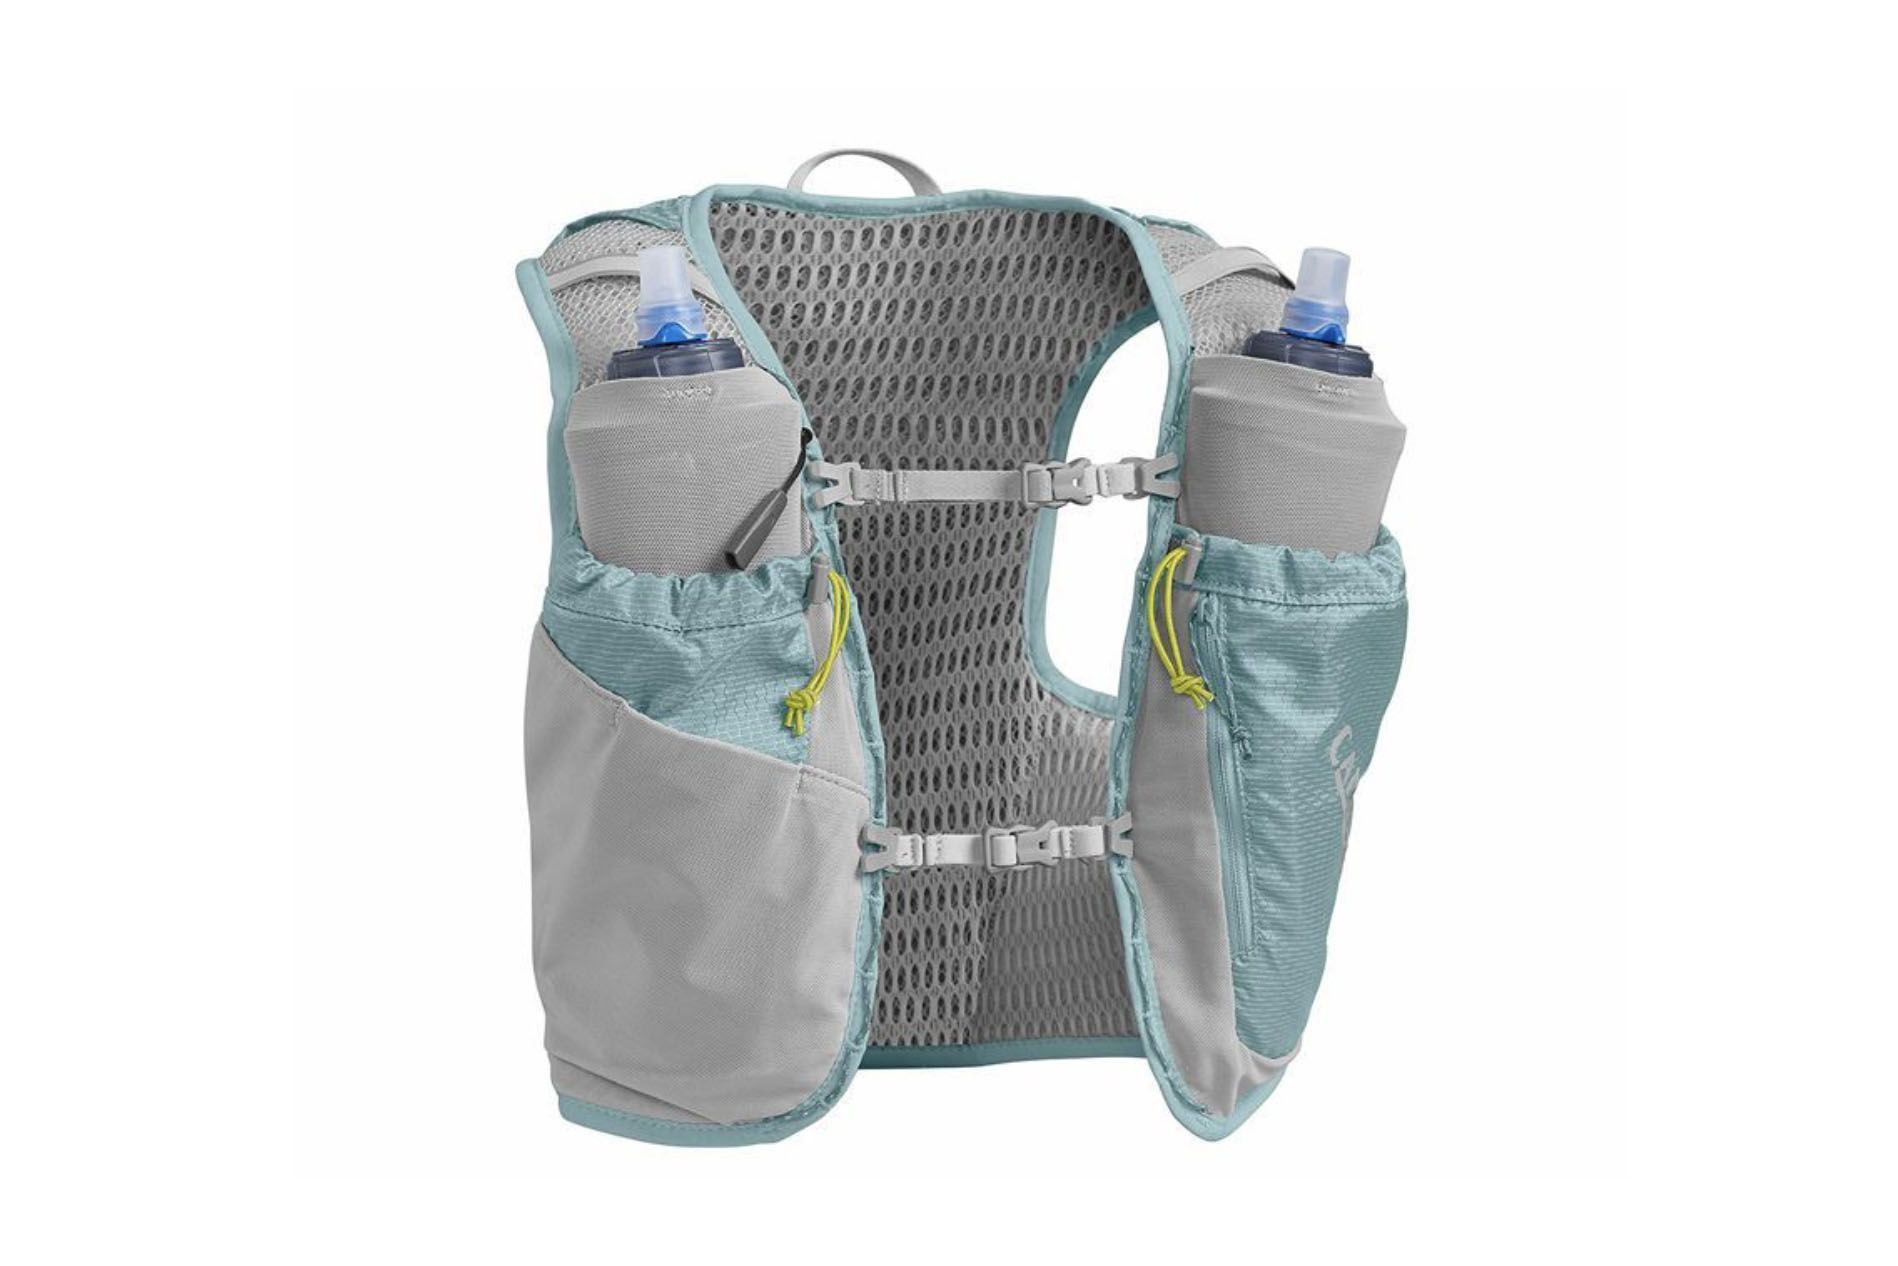 Triwonder Hydration Pack Backpack 5L Lightweight Deluxe Marathoner Running Race Hydration Vest 